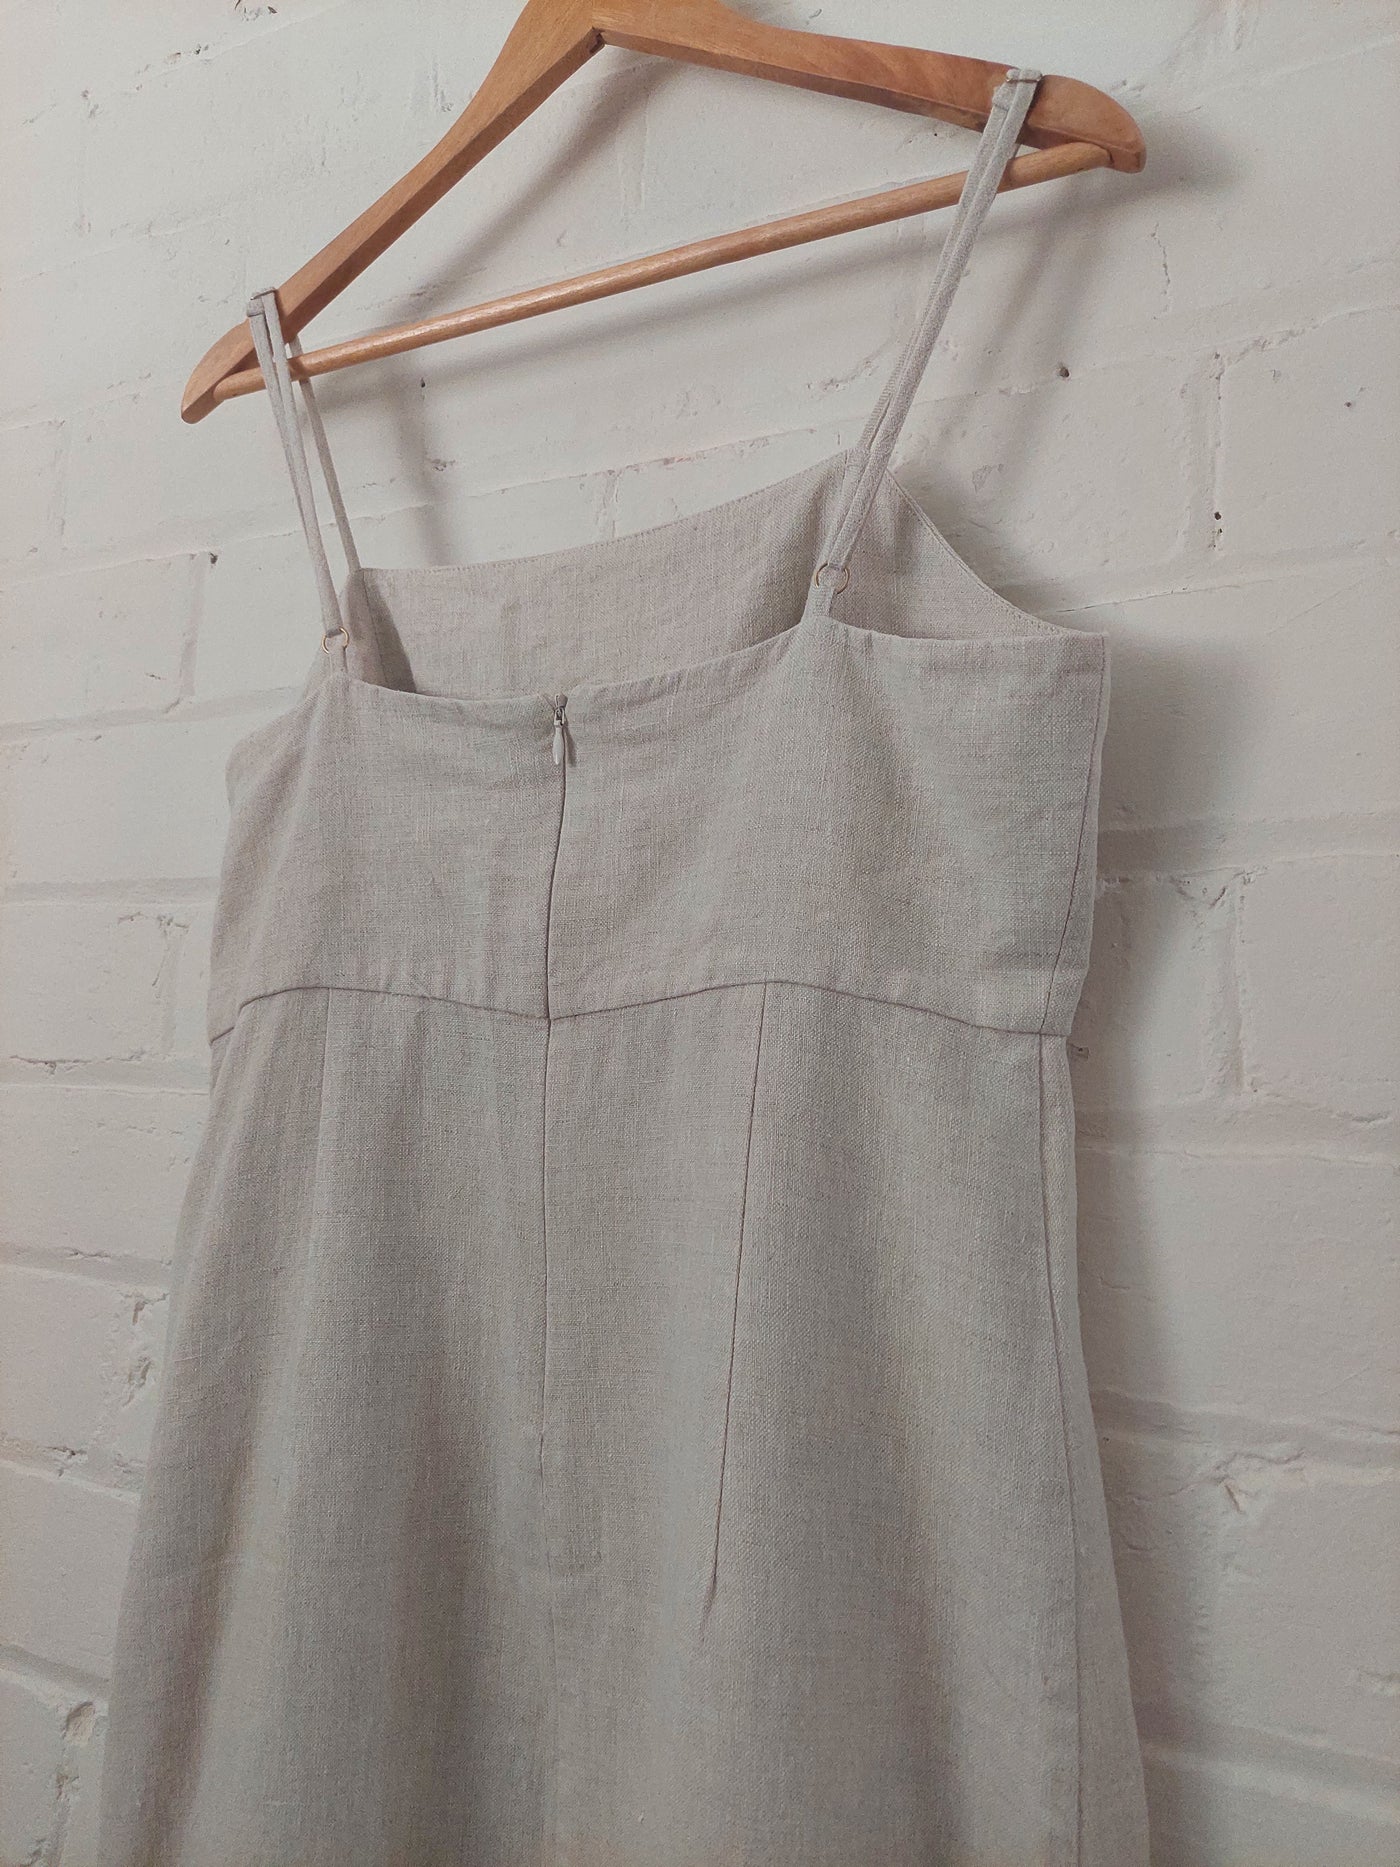 Shona Joy 'Aluaro' Fitted Midi Dress in Natural Linen, Size 12